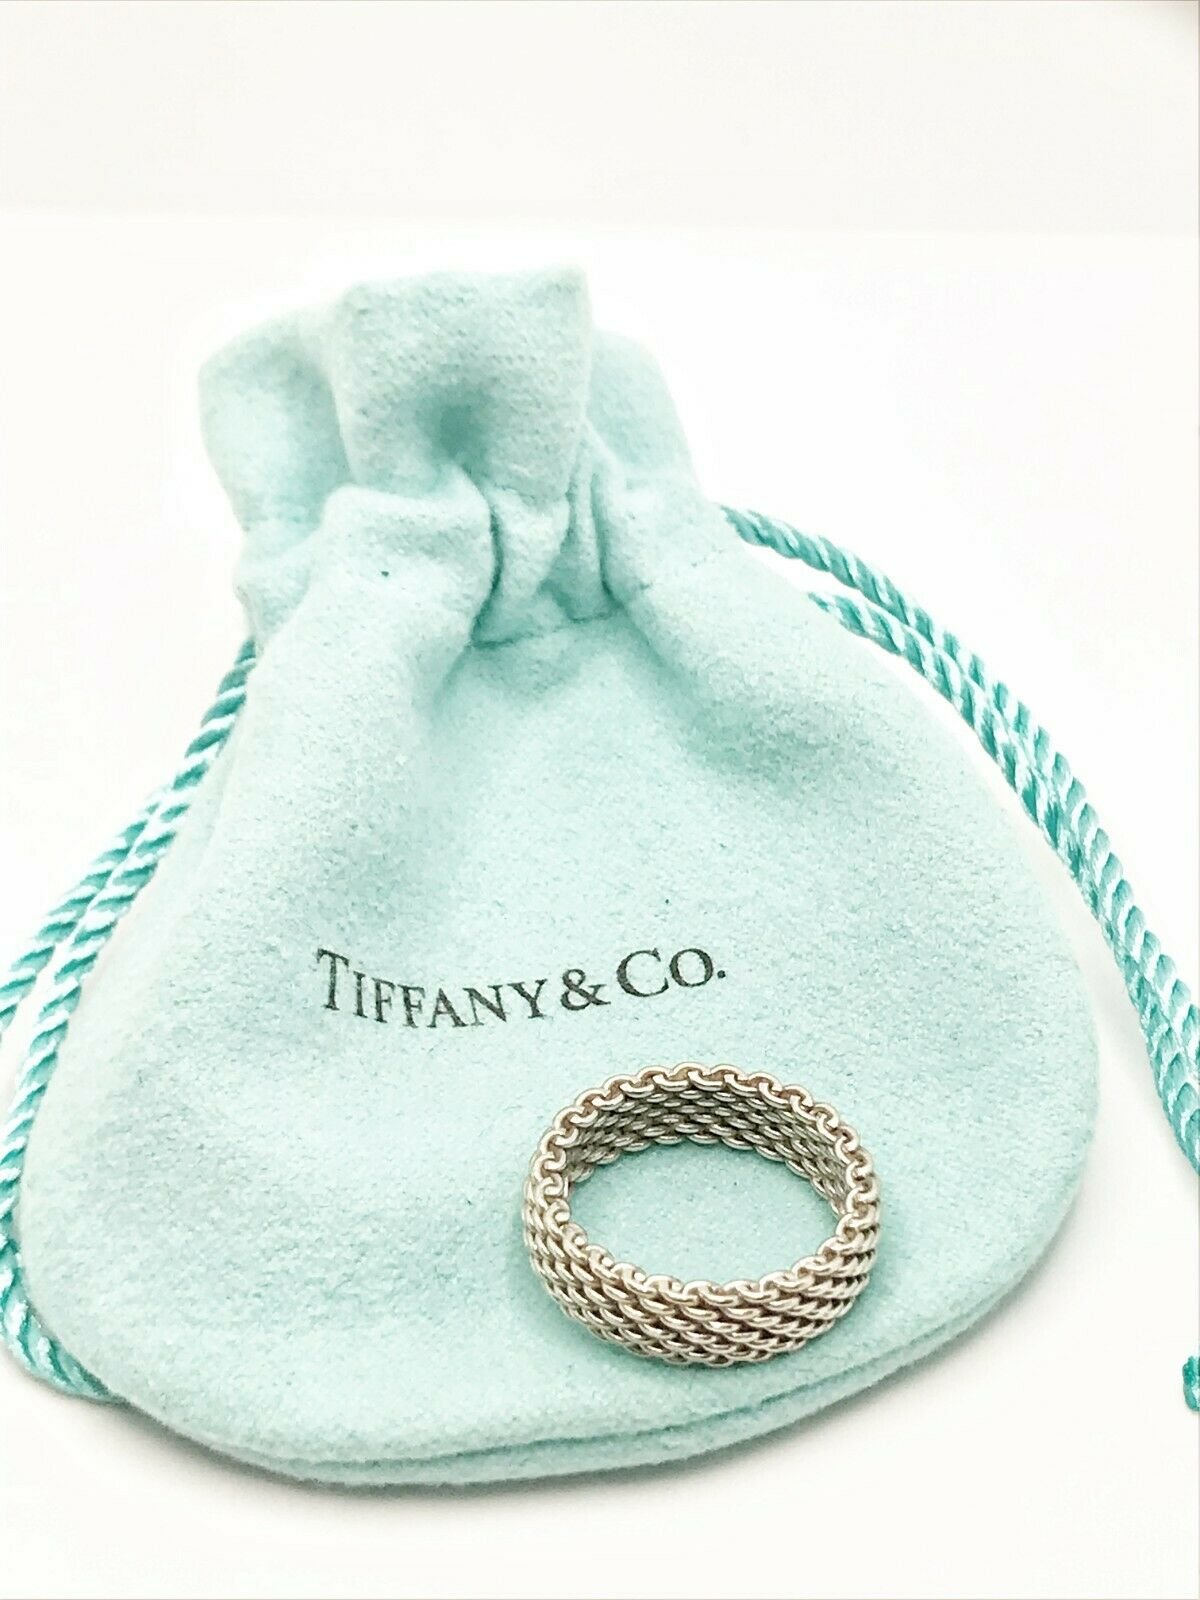 Tiffany & Co. 18K 750 Yellow Gold Mesh Somerset Wide Band Ring Sz 6 | eBay